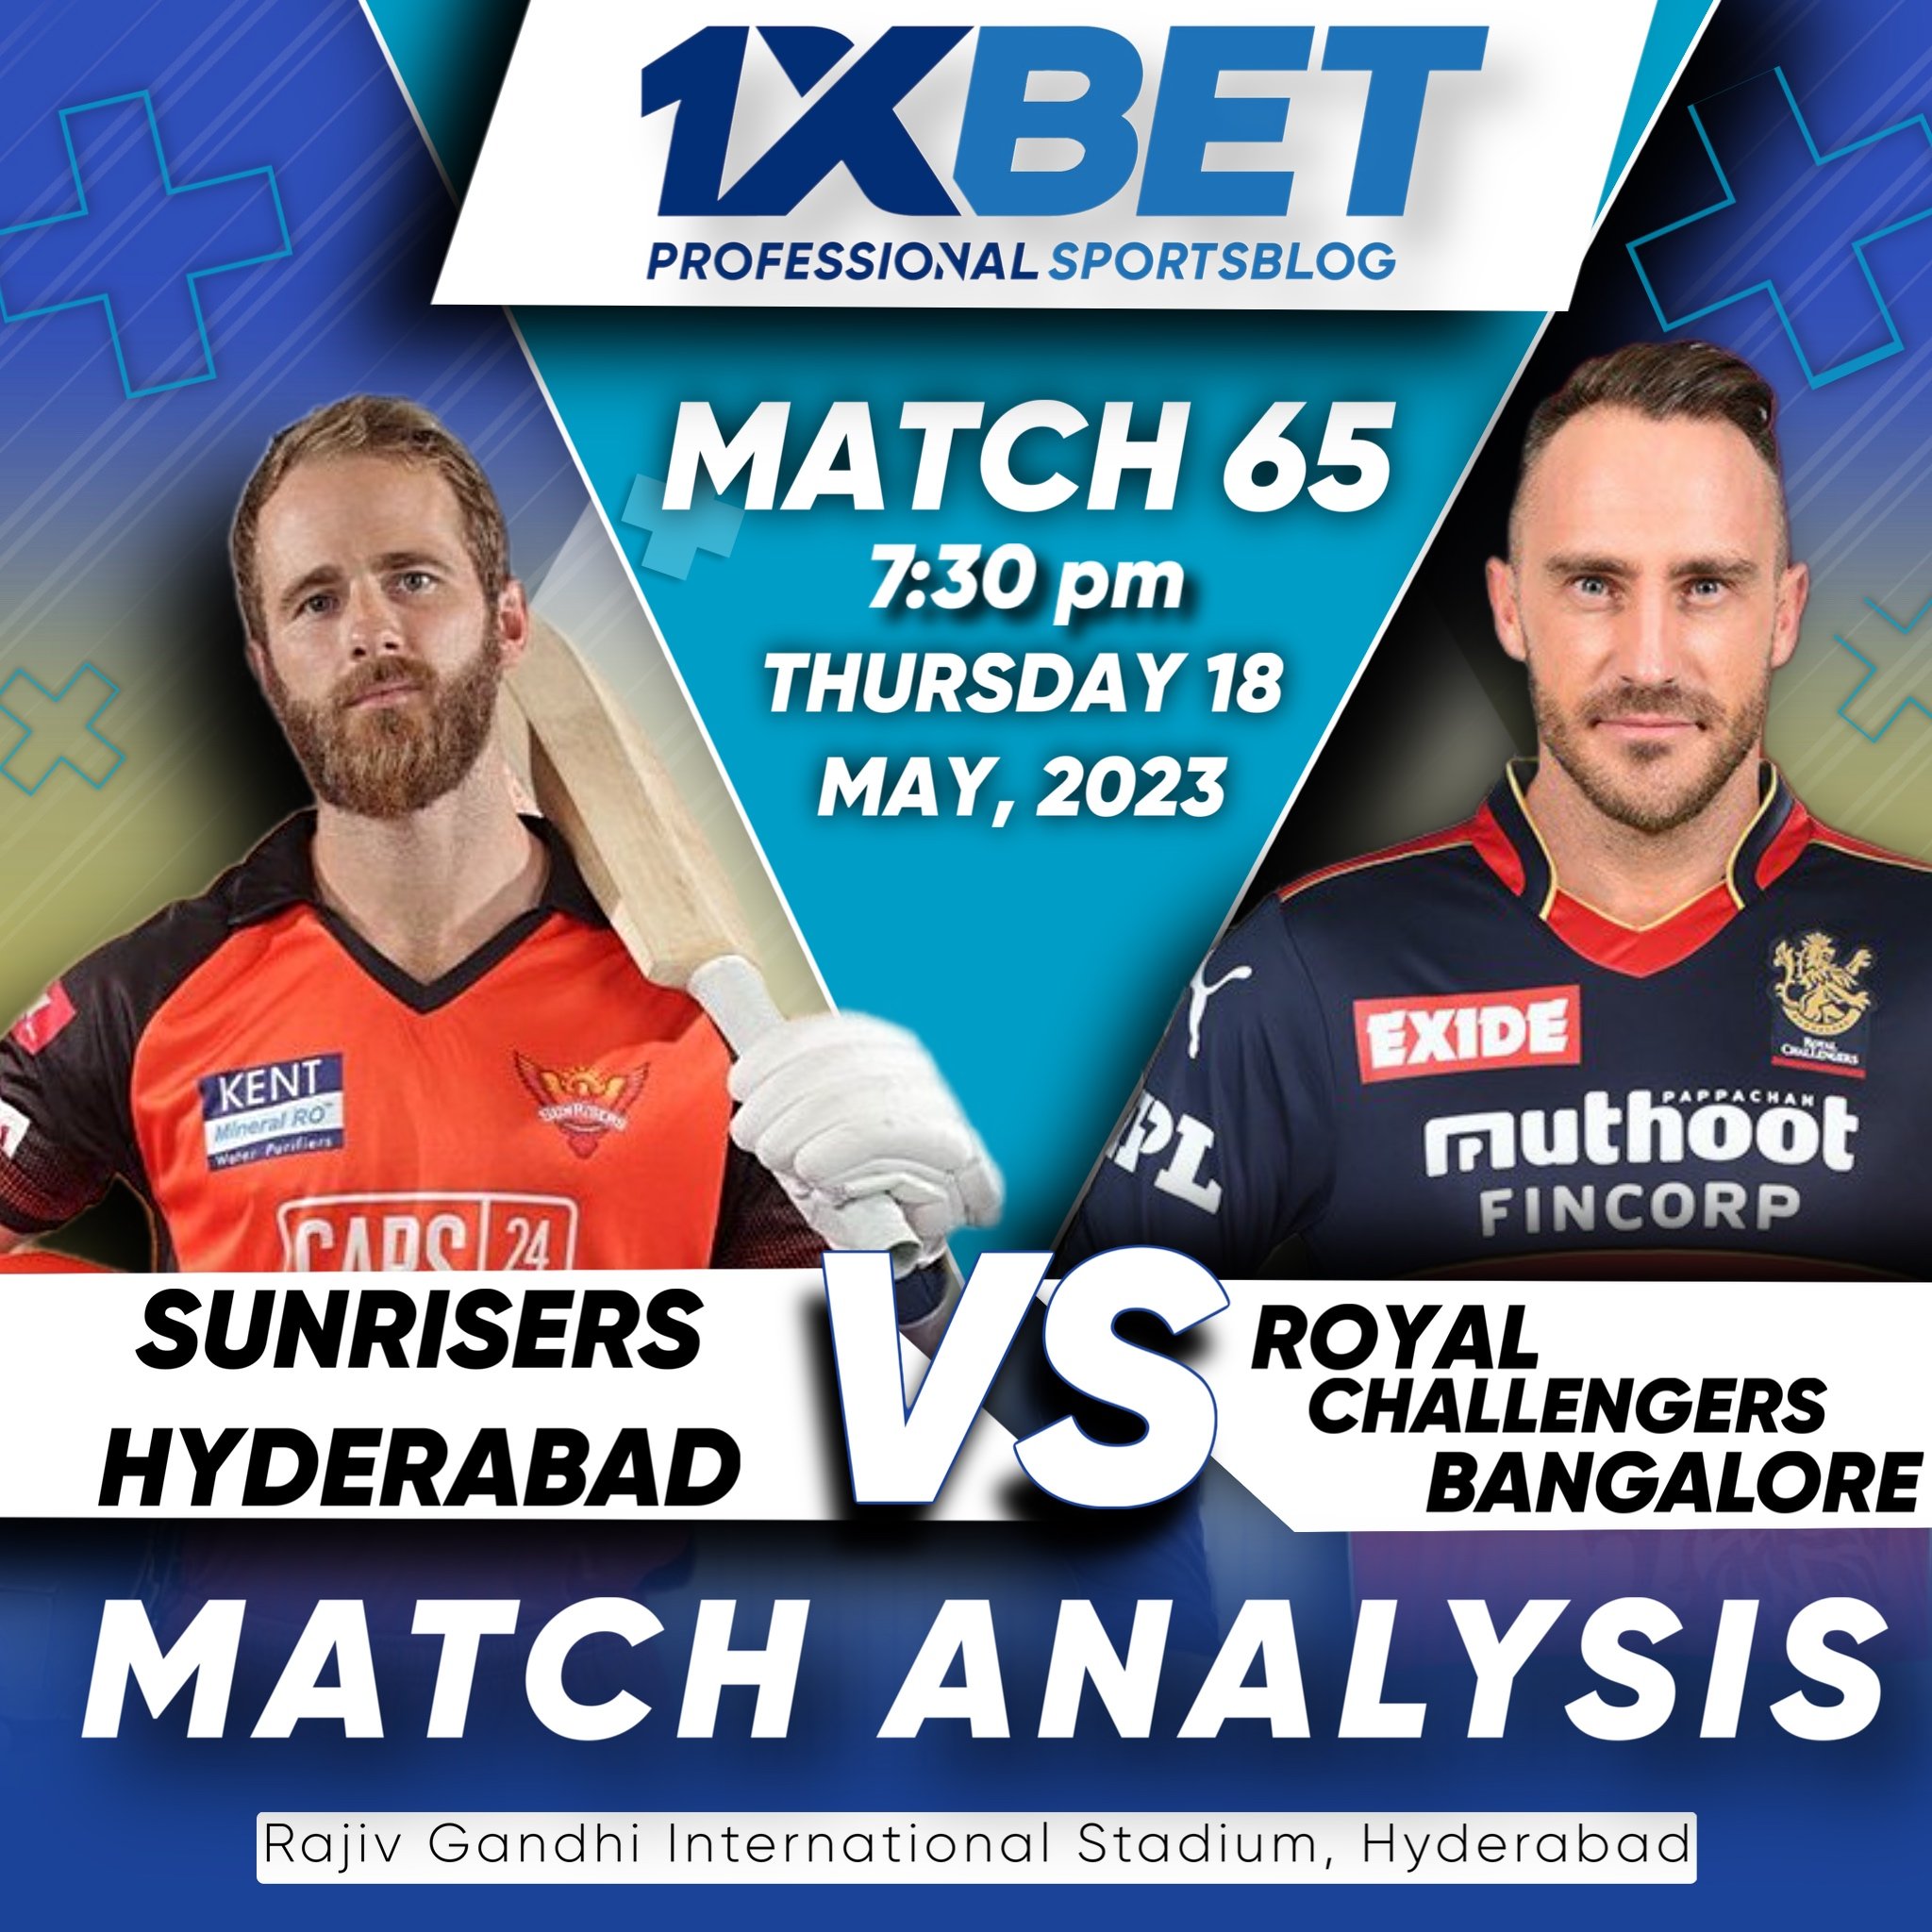 Sunrisers Hyderabad vs Royal Challengers Bangalore, IPL 2023, 65th Match Analysis